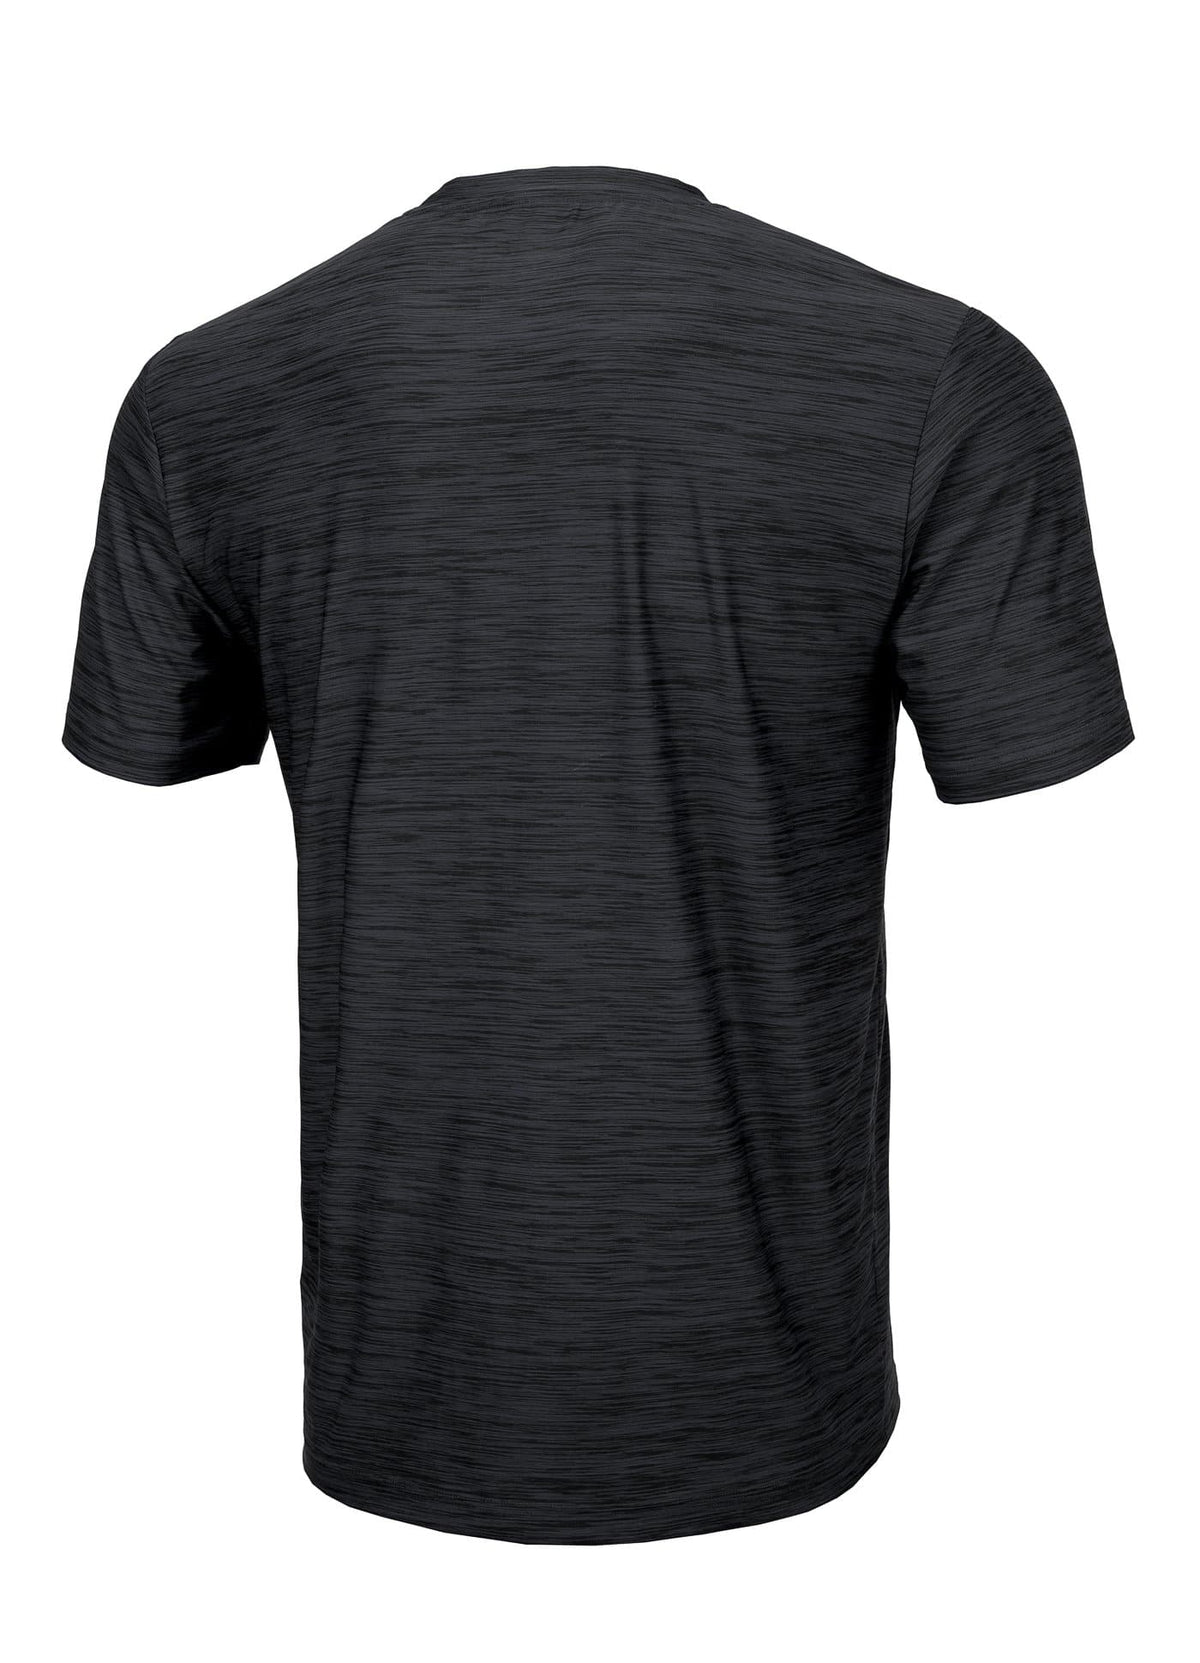 T-shirt Middleweight NO LOGO Black Melange - Pitbull West Coast International Store 